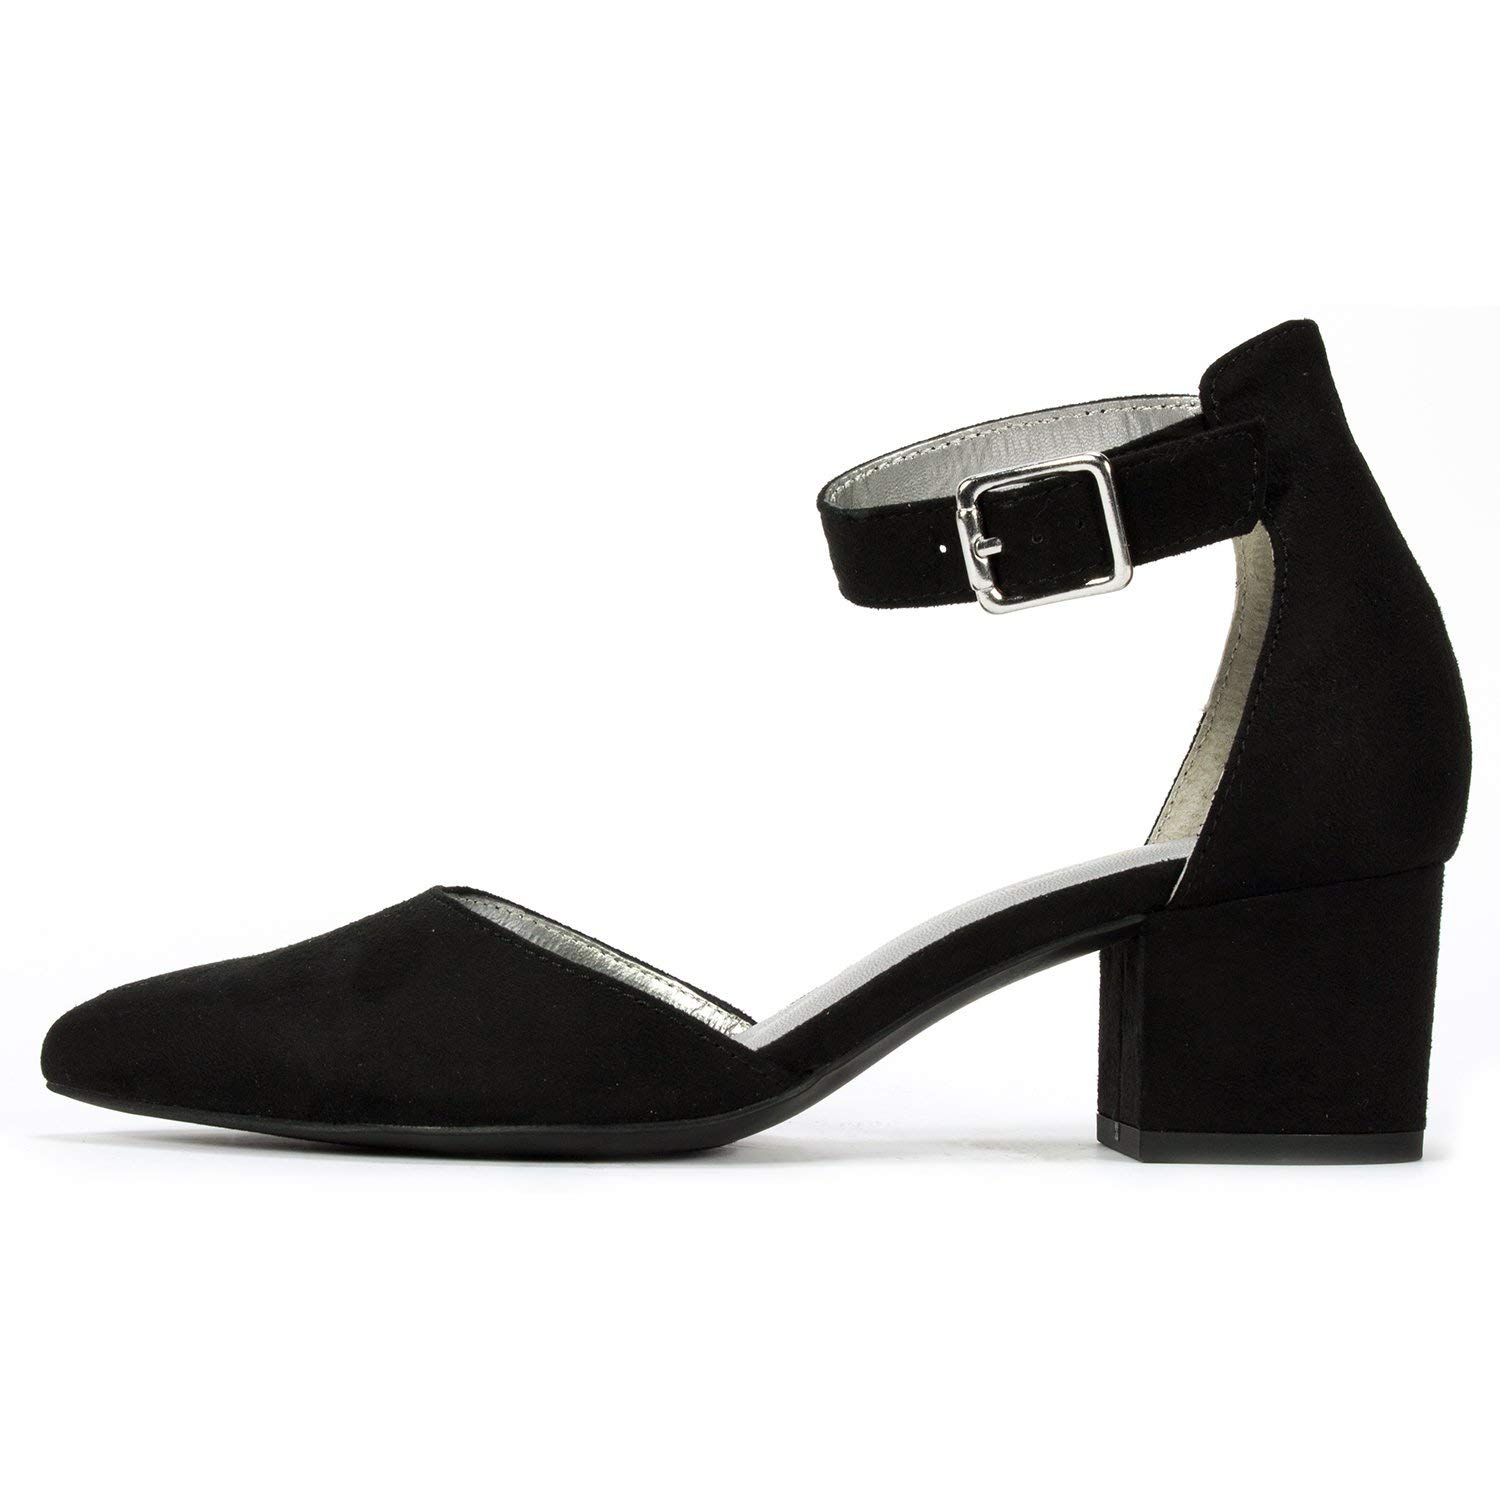 SEVEN DIALS Hilda' Women's Heel, Black, Size 8.5 5oLf | eBay